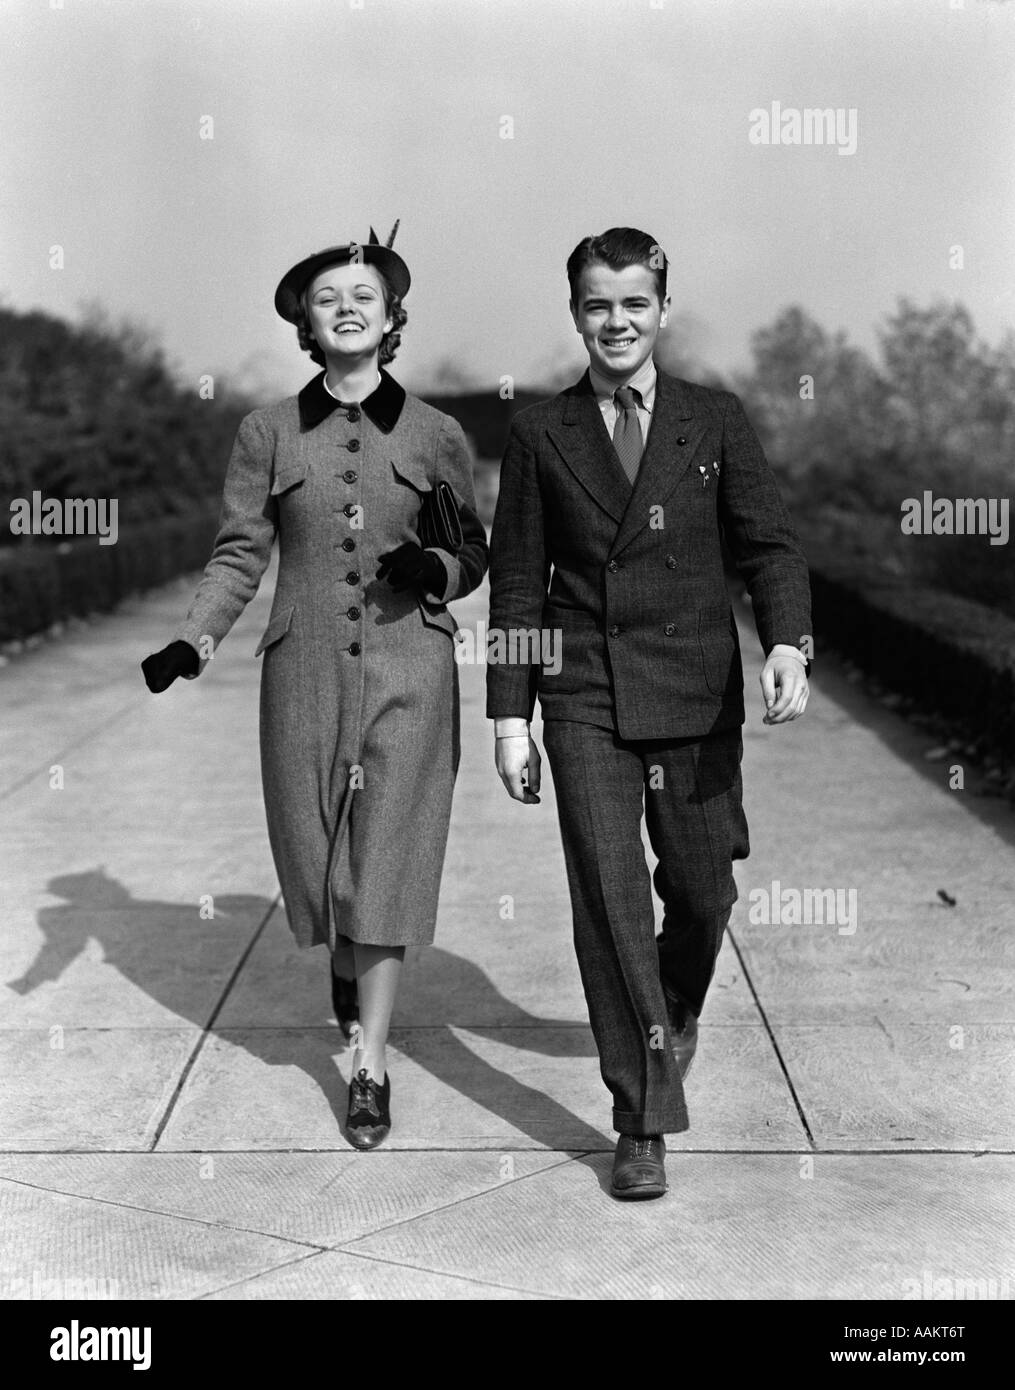 1940s YOUNG SMILING TEENAGE COUPLE WALKING ON SIDEWALK SMILING DRESSED UP SUNDAY BEST Stock Photo